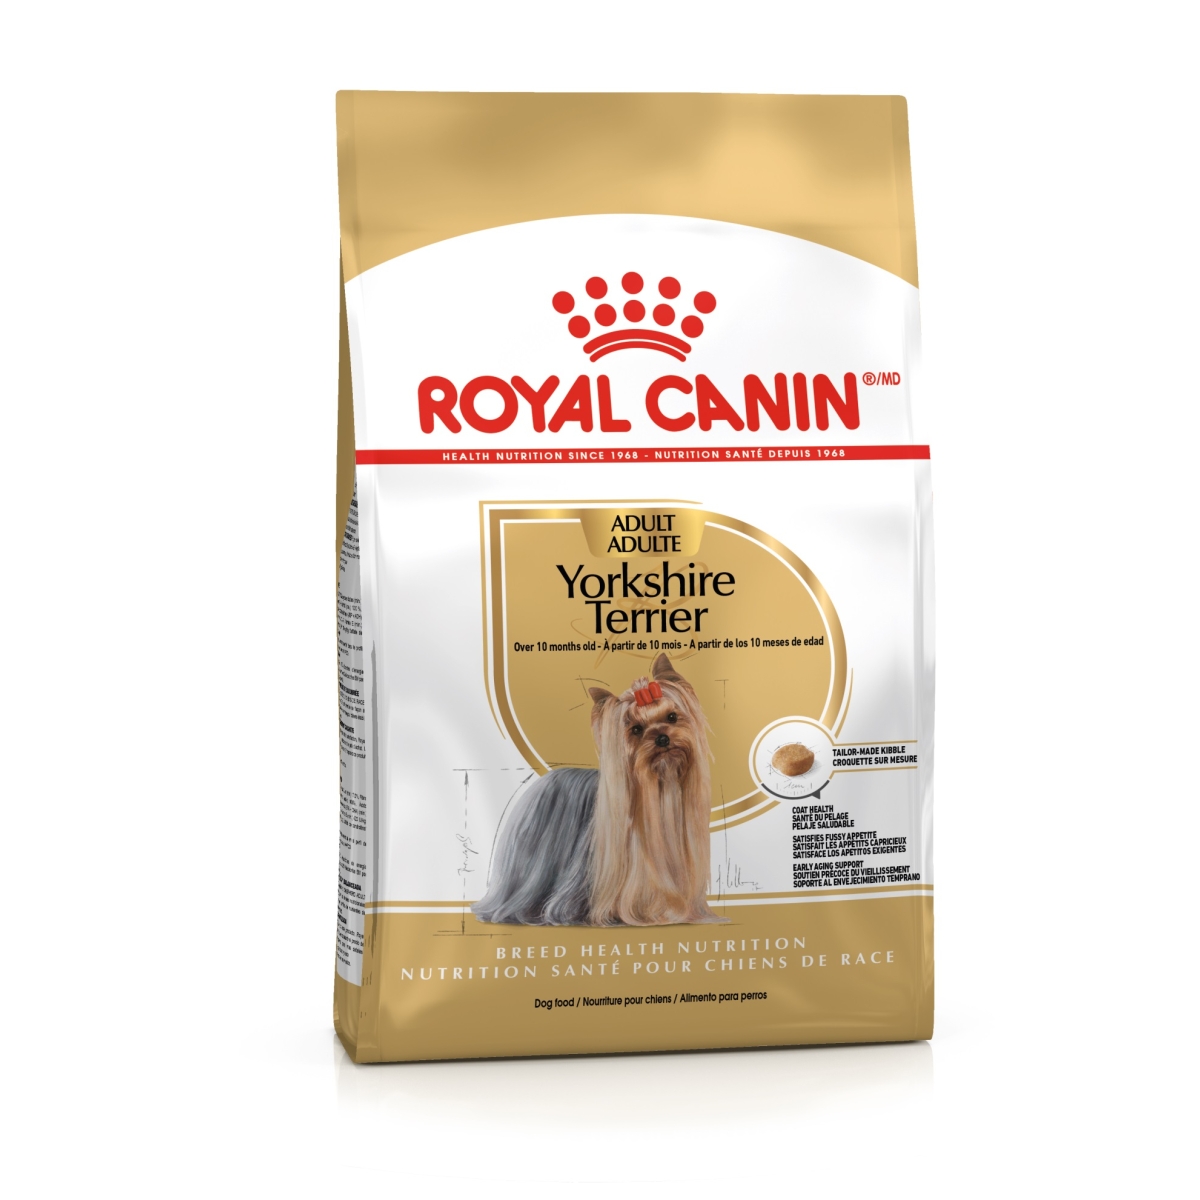 Royal Canin koeratoit täiskasv. yorkshire terjeritele 500 g